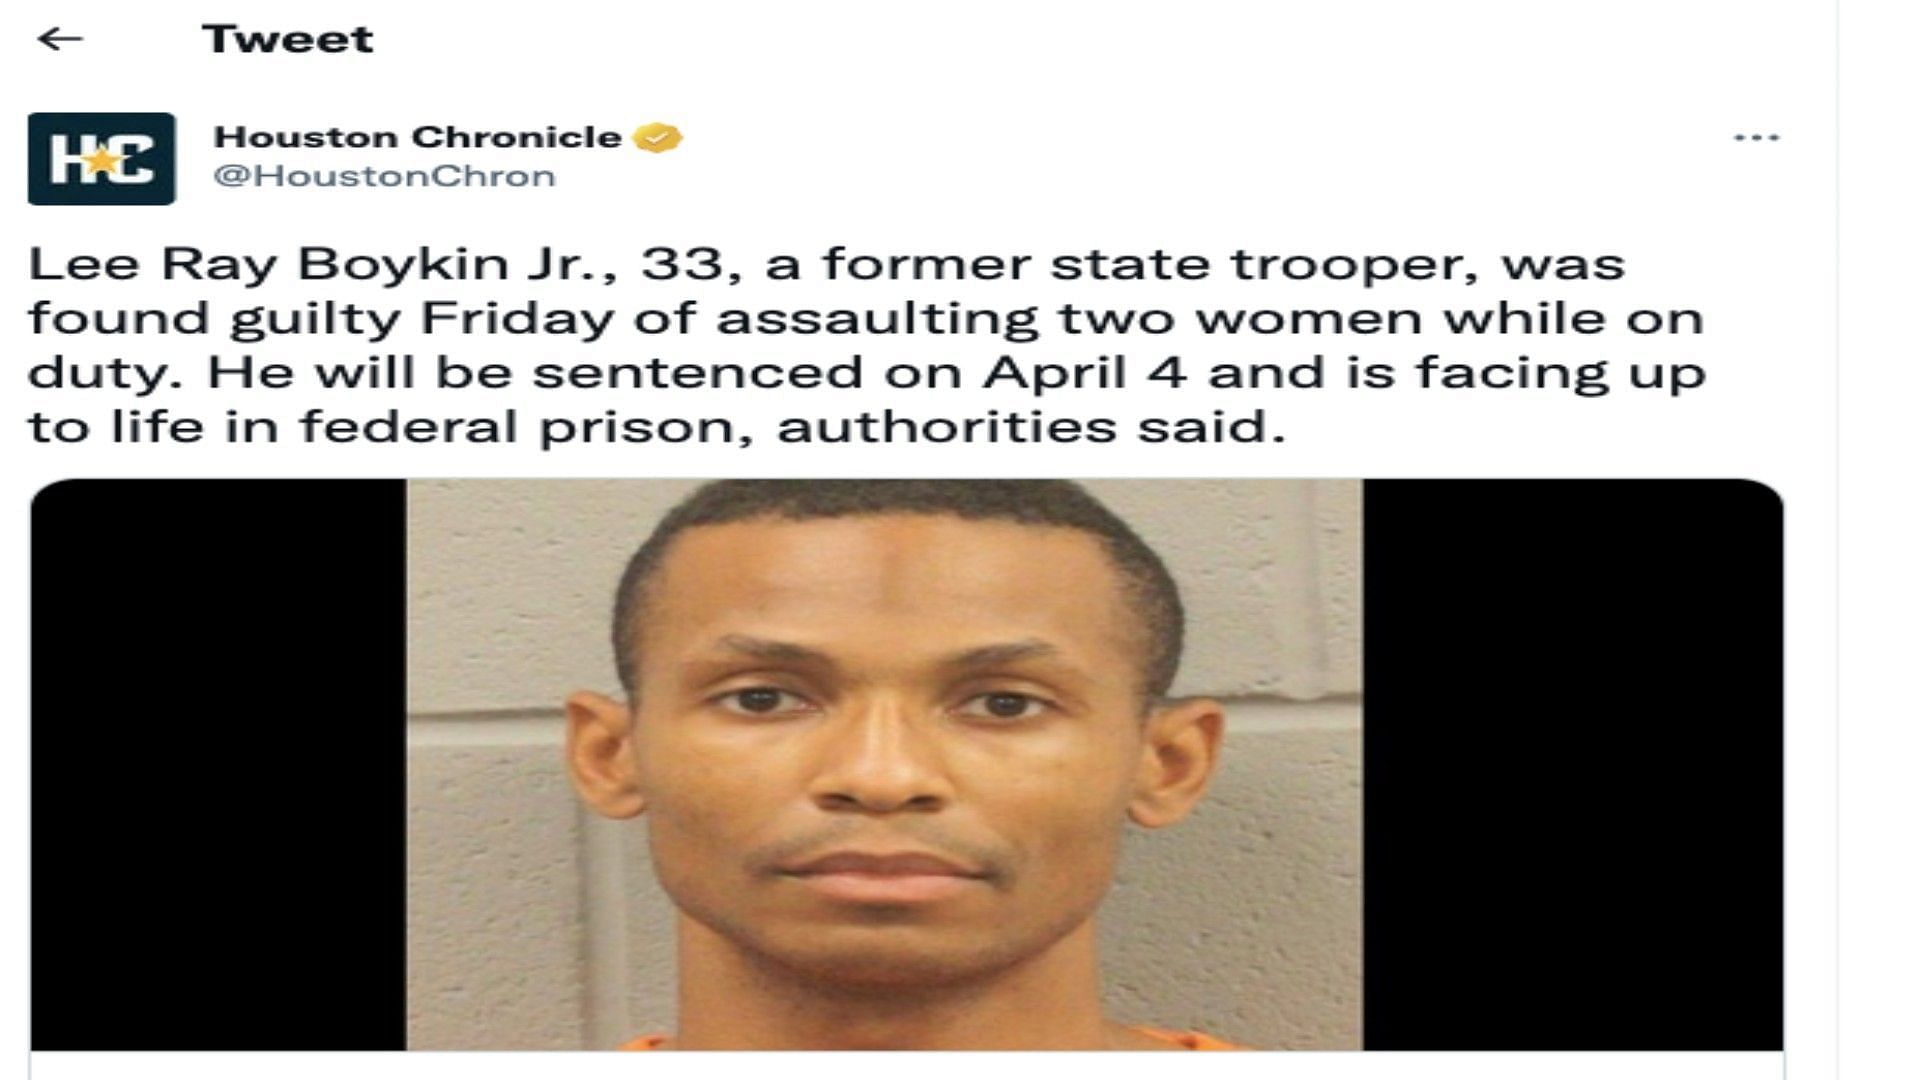 He was sentenced on April 4 (Image screenshot via Twitter)